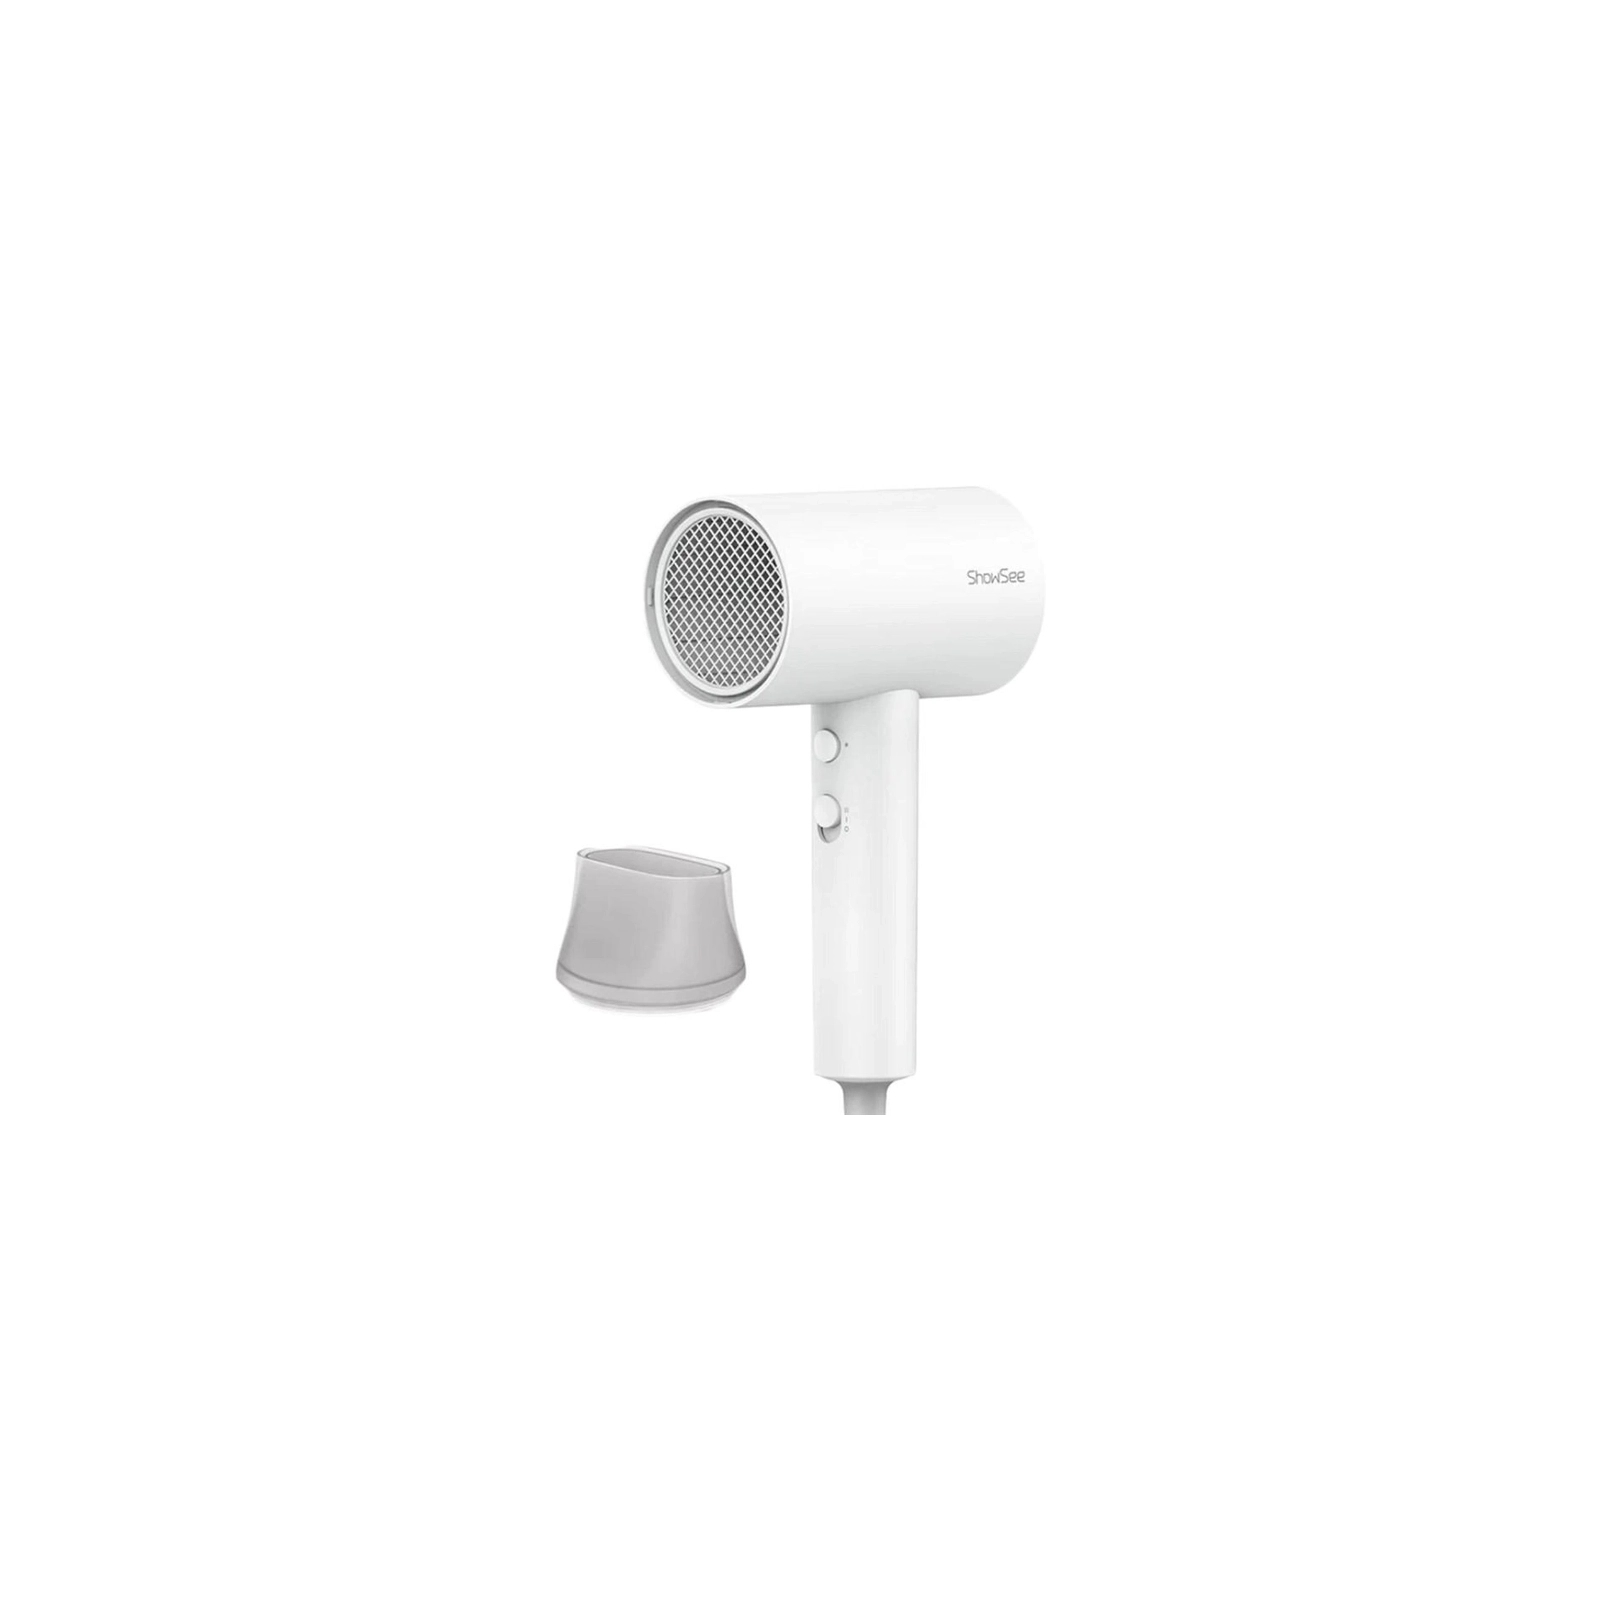 Фен Xiaomi ShowSee Hair Dryer A10-W 1800W White зображення 2